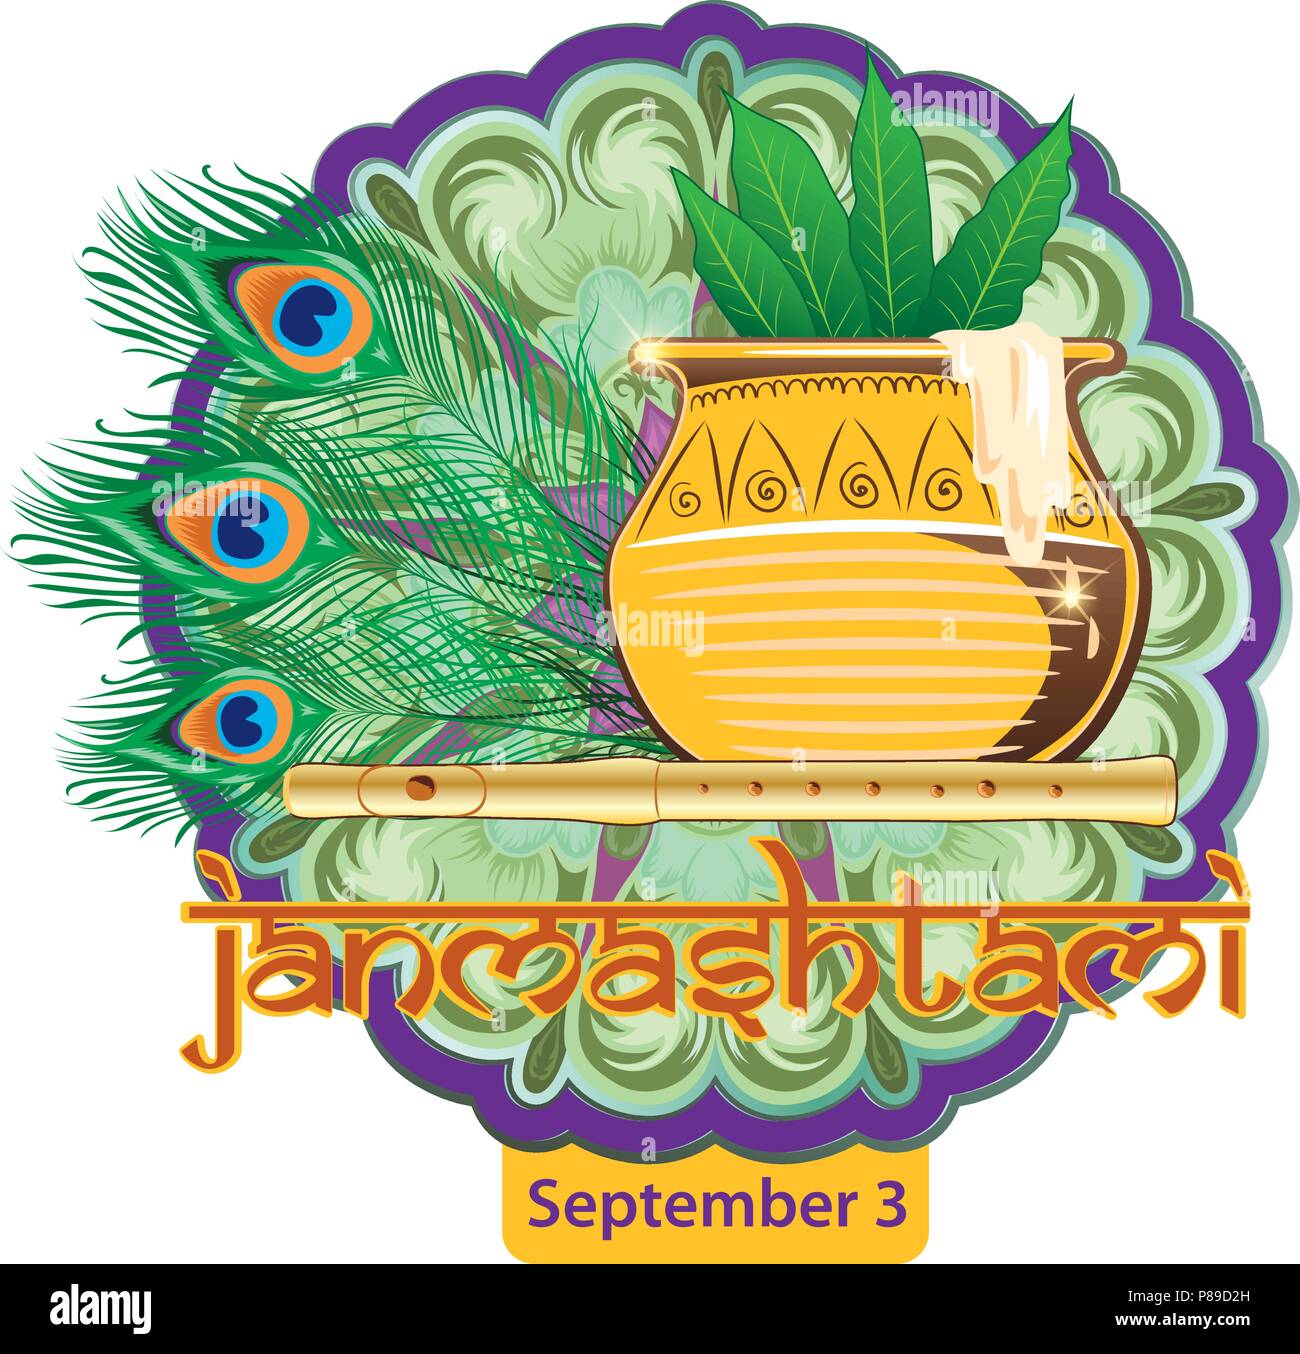 illustration of Lord Krishna in Happy Janmashtami festival of India with text in Hindi meaning Shri Krishn Janmashtami Stock Vector